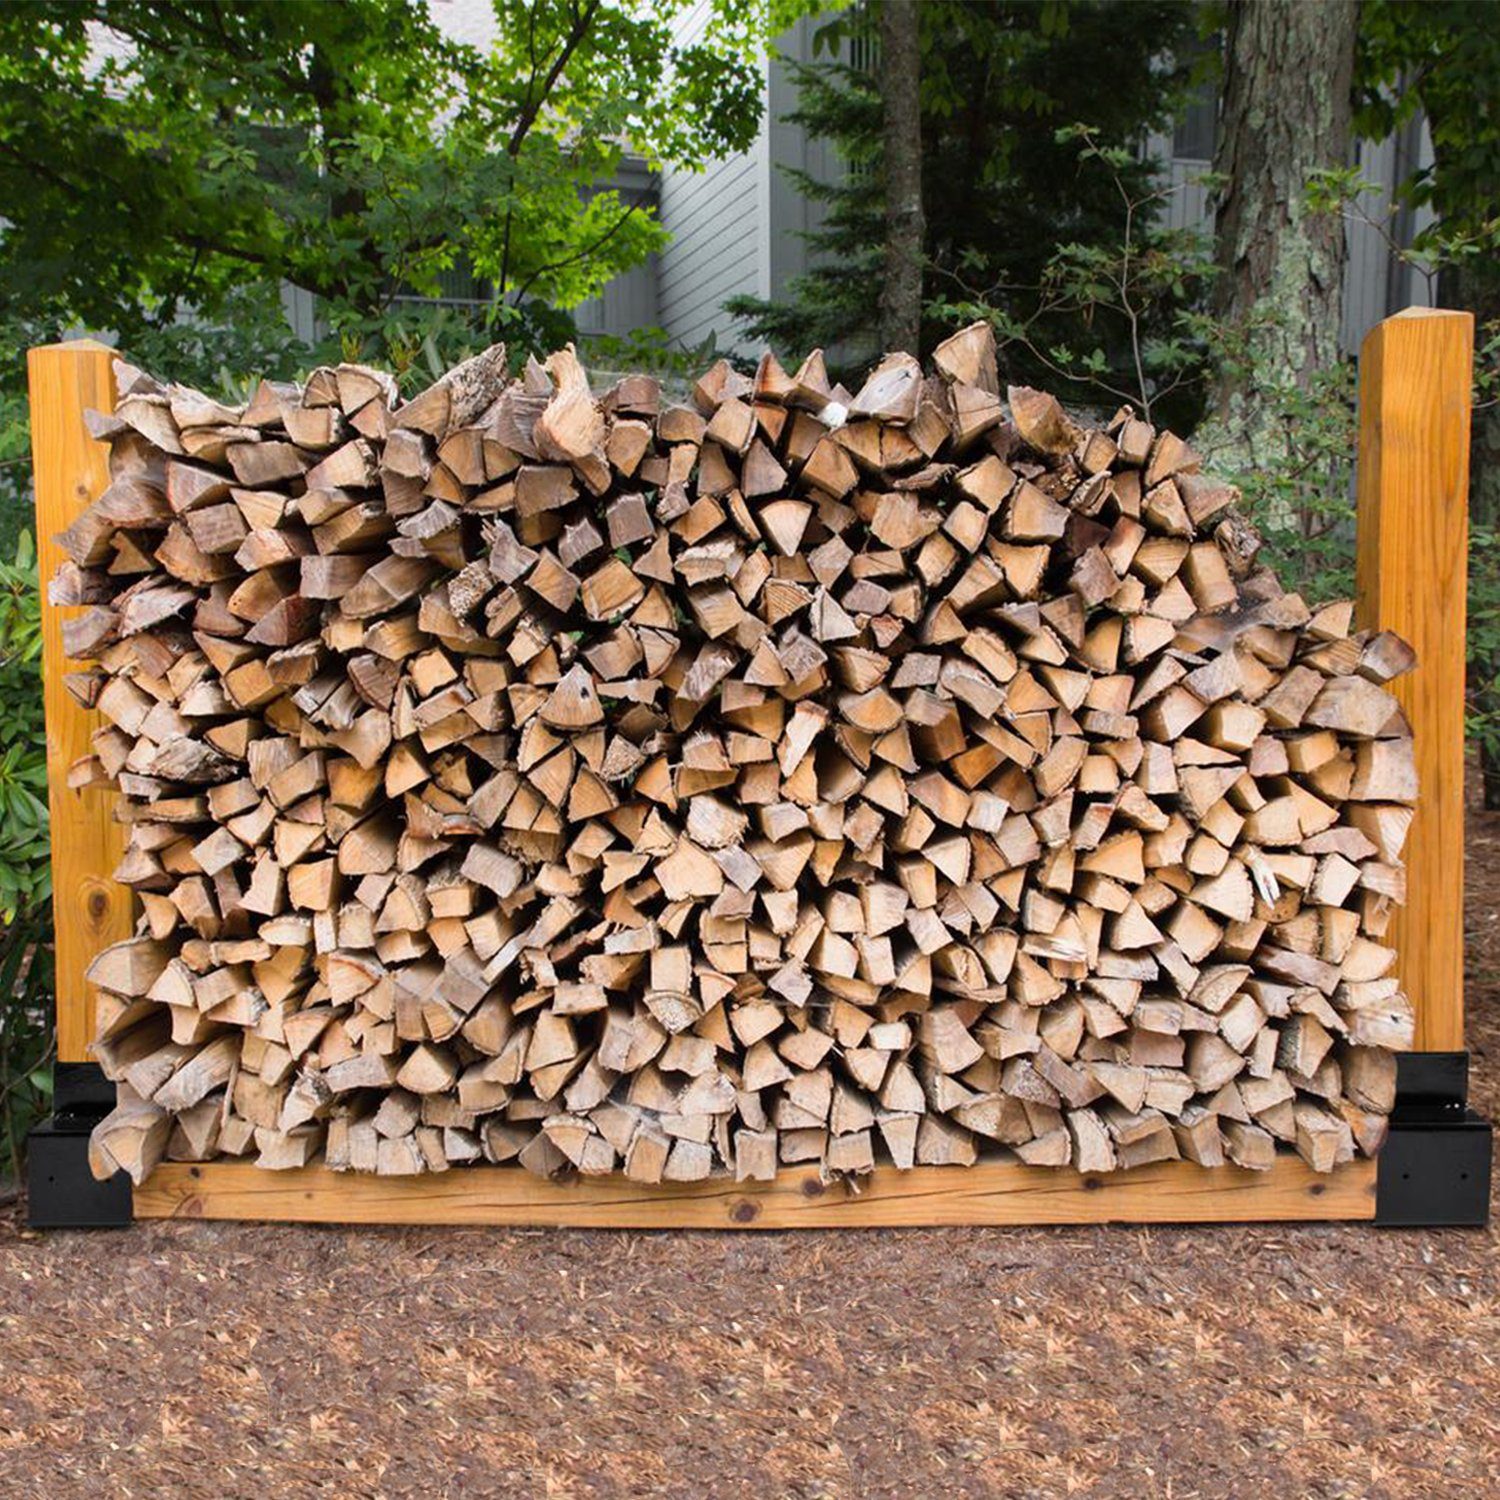 4x Stapelhilfe Lospitch Brennholz Brennholz Holzstapelhilfe Metall Verzinkt Stapelregal für